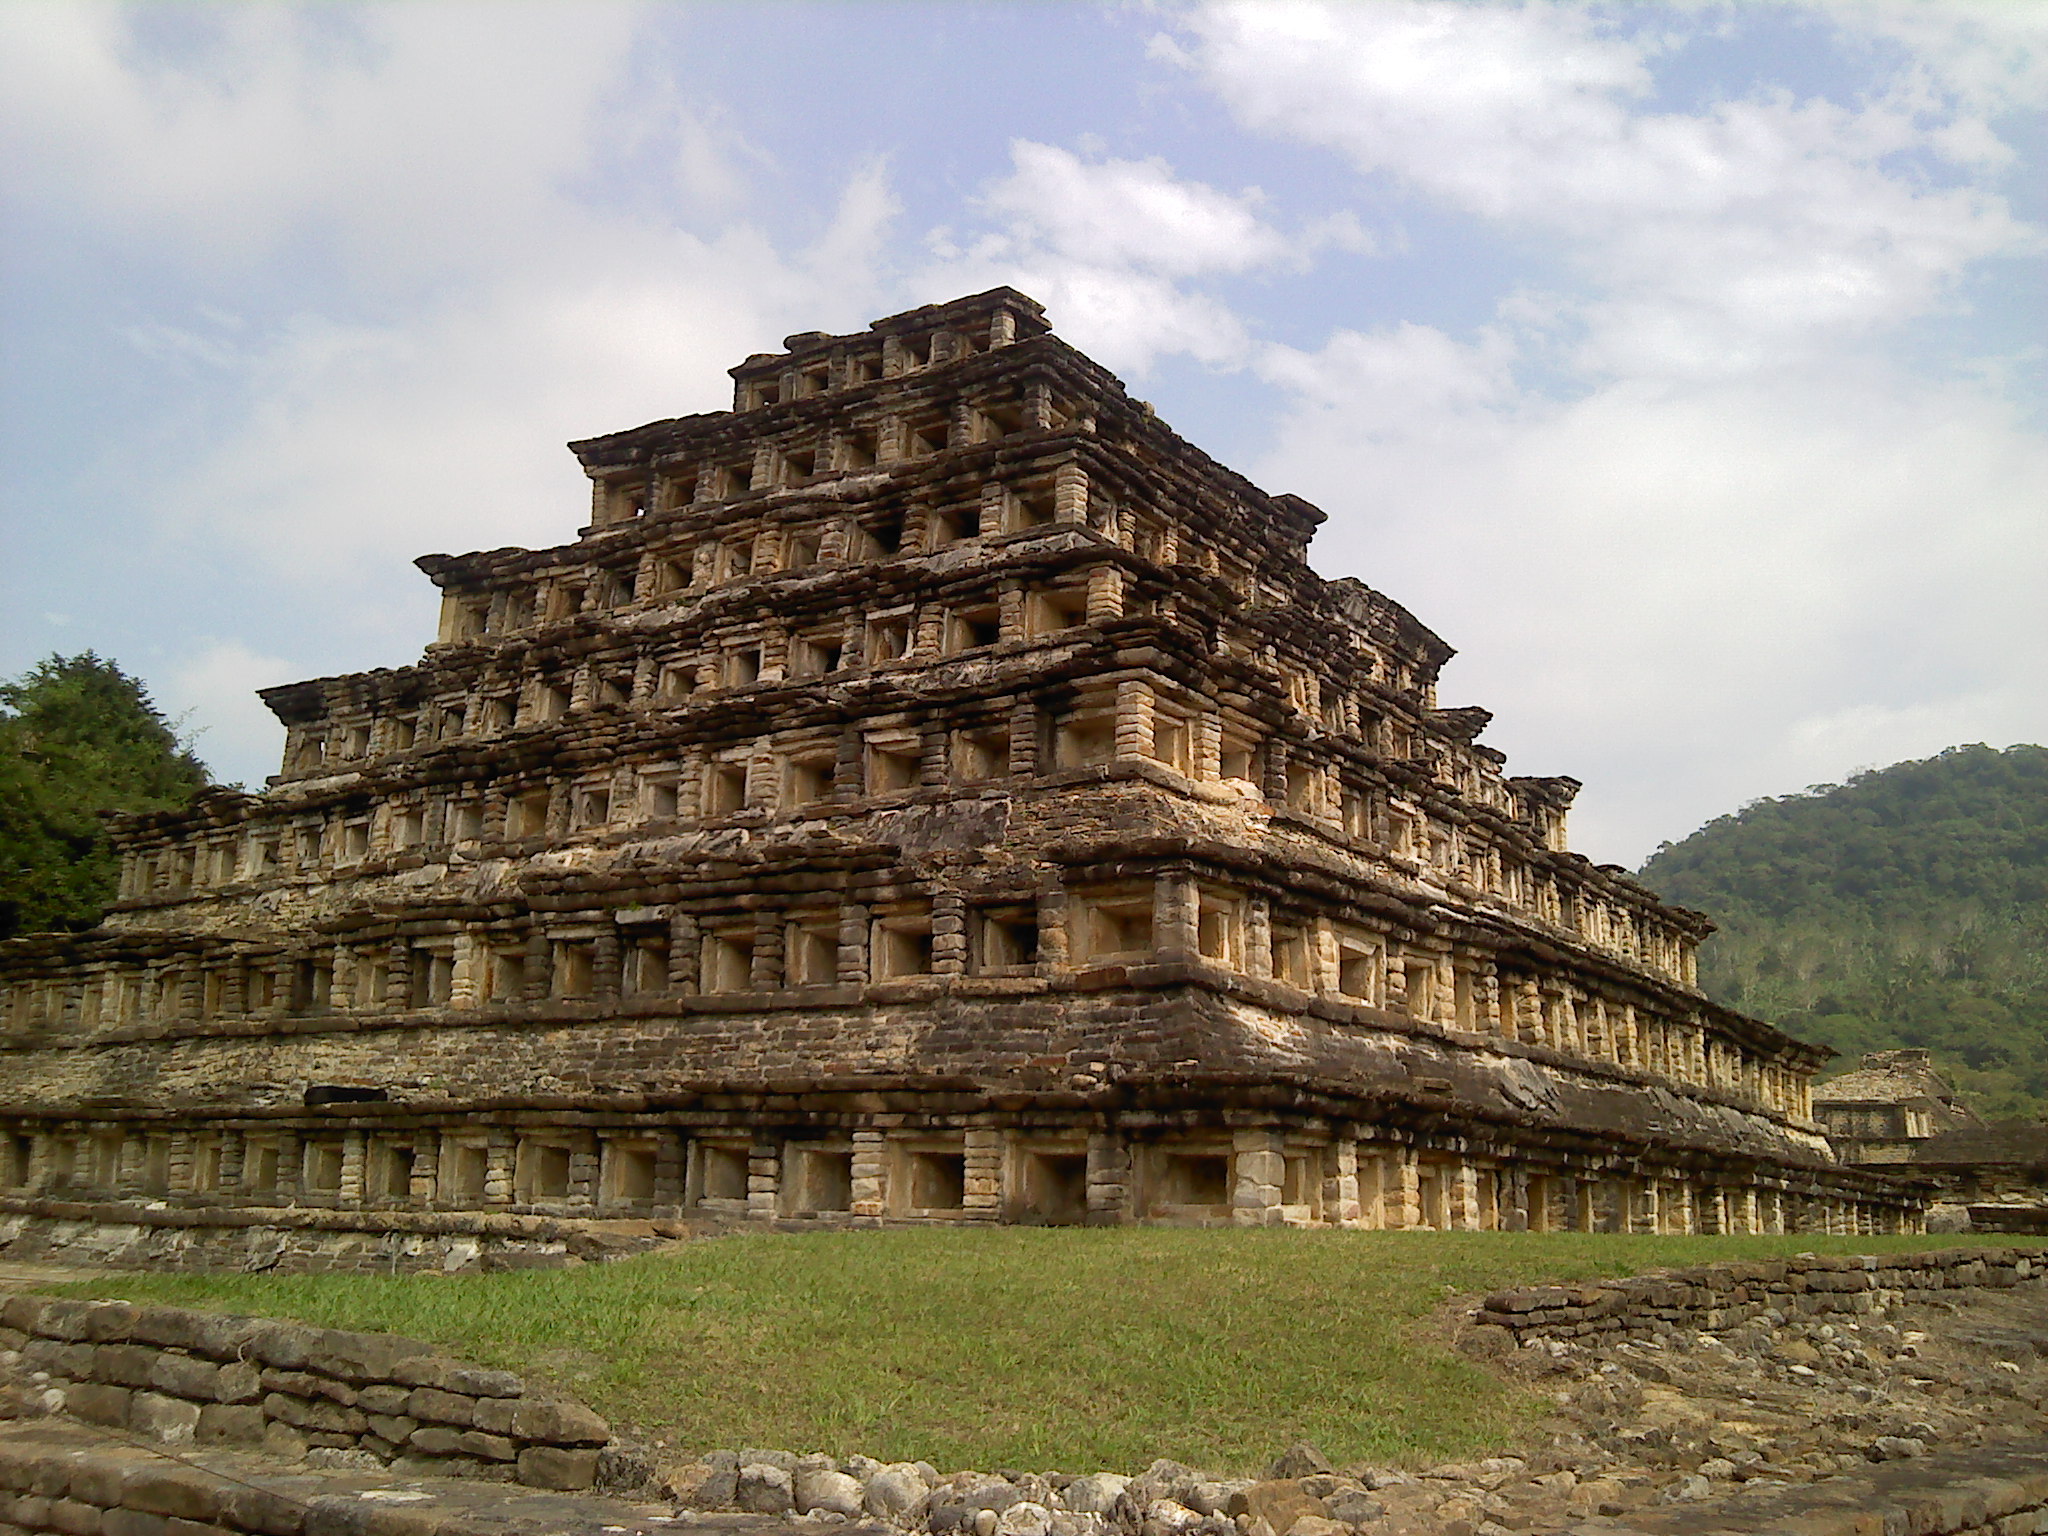 Arquitectura Prehispanica